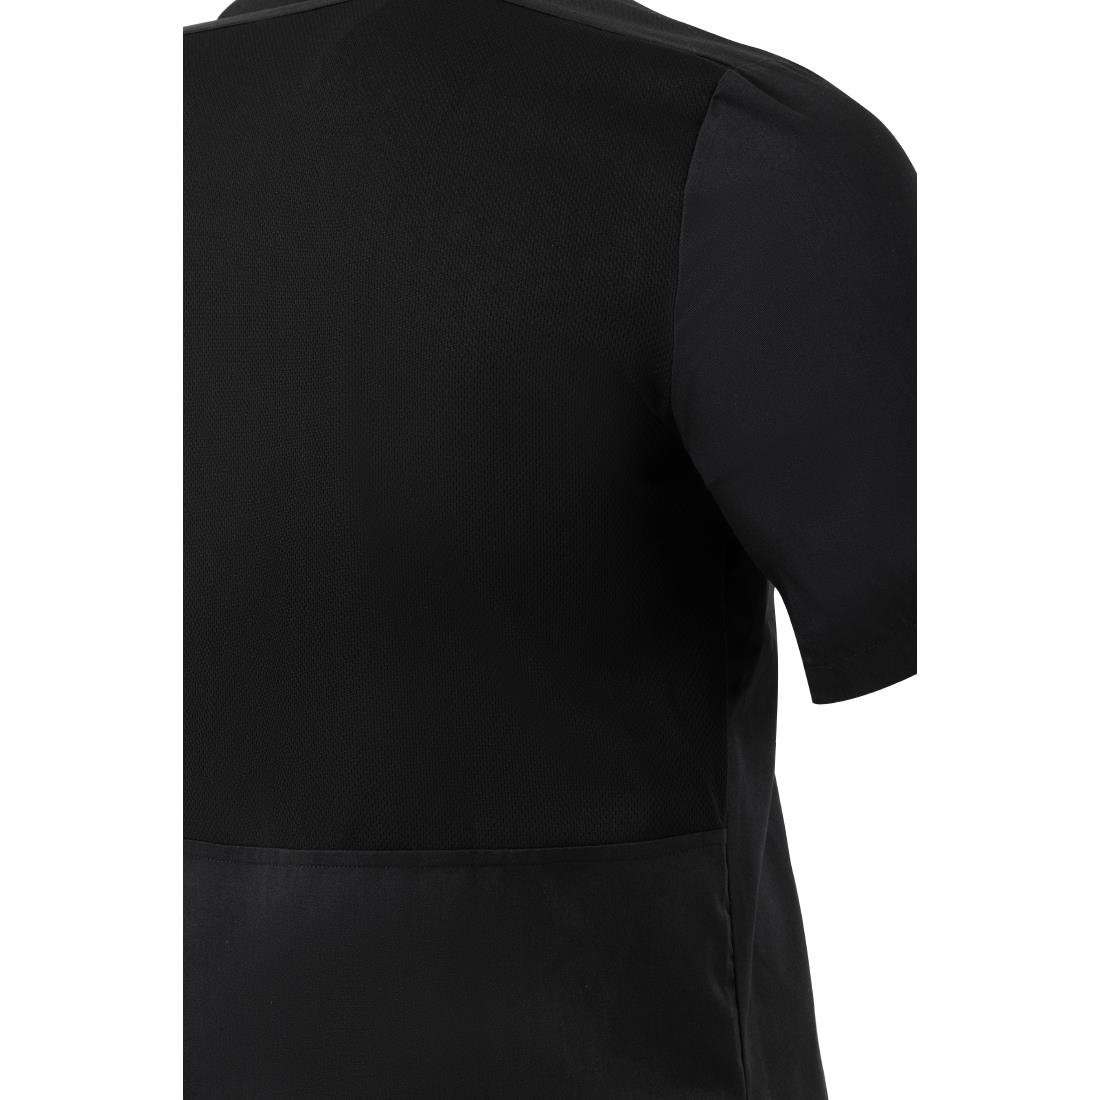 BA115-XL Southside Harlem Short Sleeve Chef Jacket Black Size XL